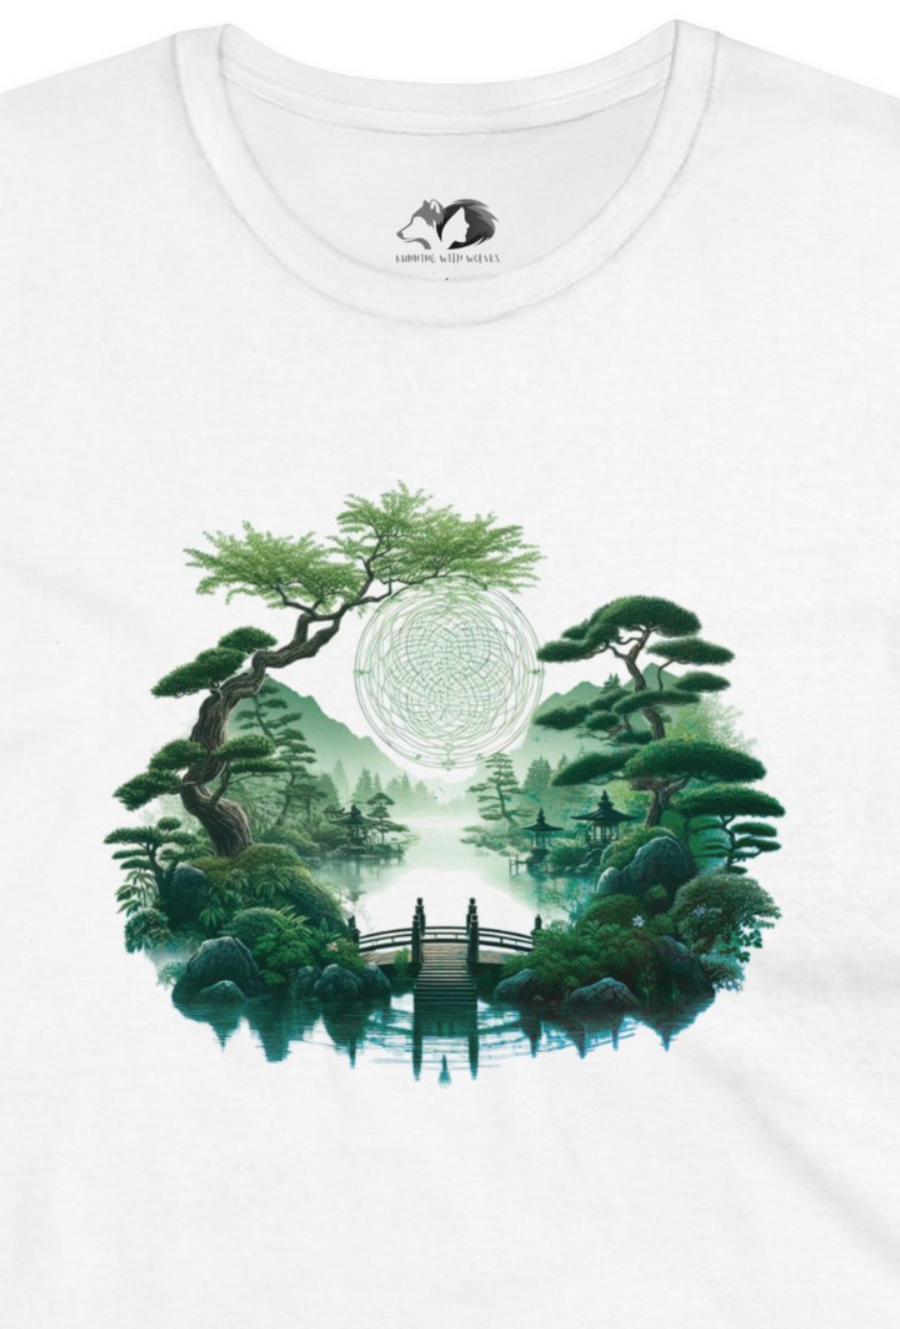 homepage-100-Cotton-Garden-of-Zen-white-japanese-tshirt-vintage-nature-shirts-ladies-graphic-shirts-2.png